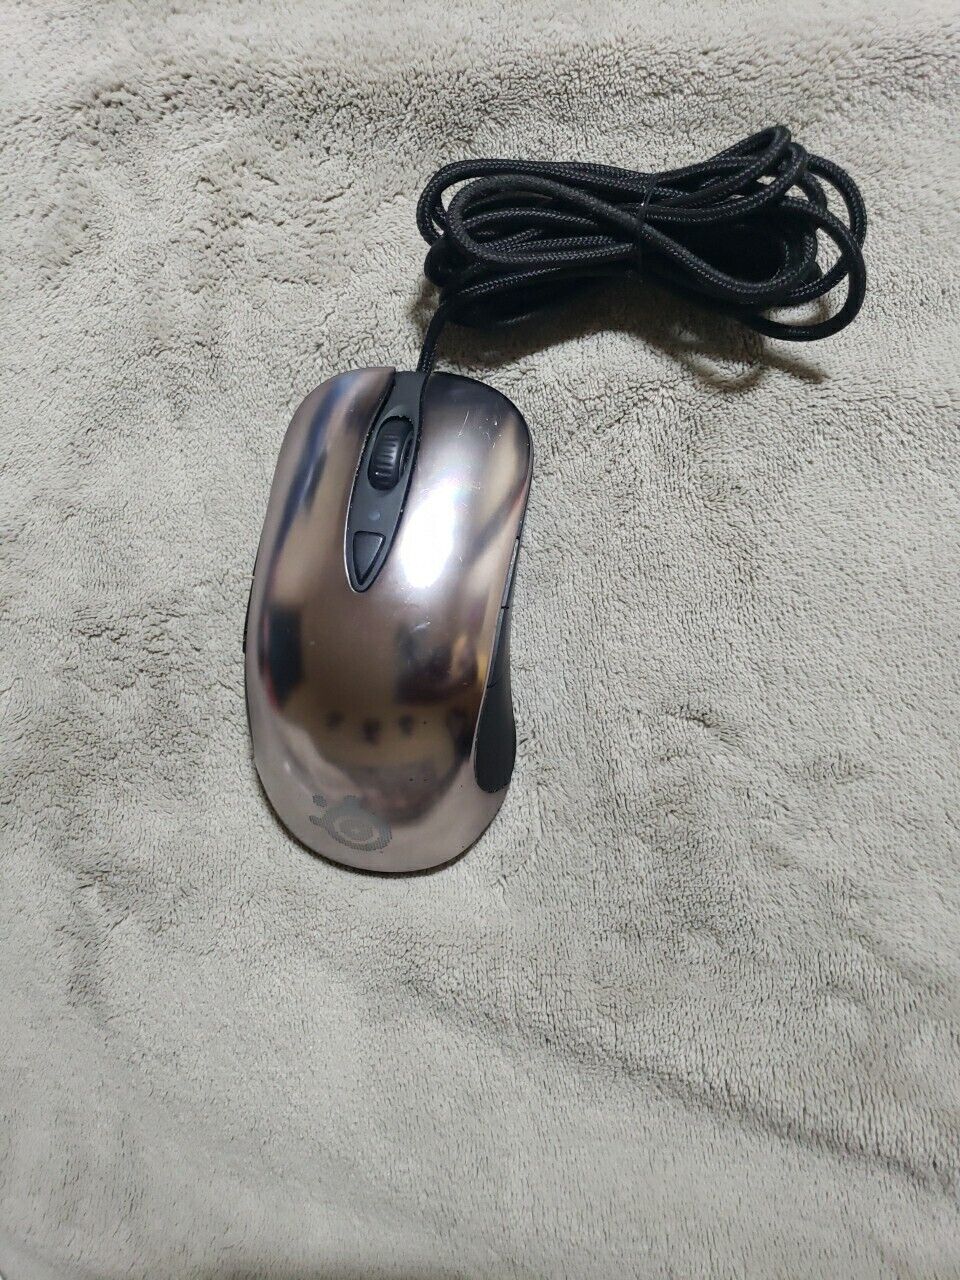 SteelSeries SENSEI Pro Gaming Laser Mouse 62150 Ergonomic Grey Illuminated WORKS